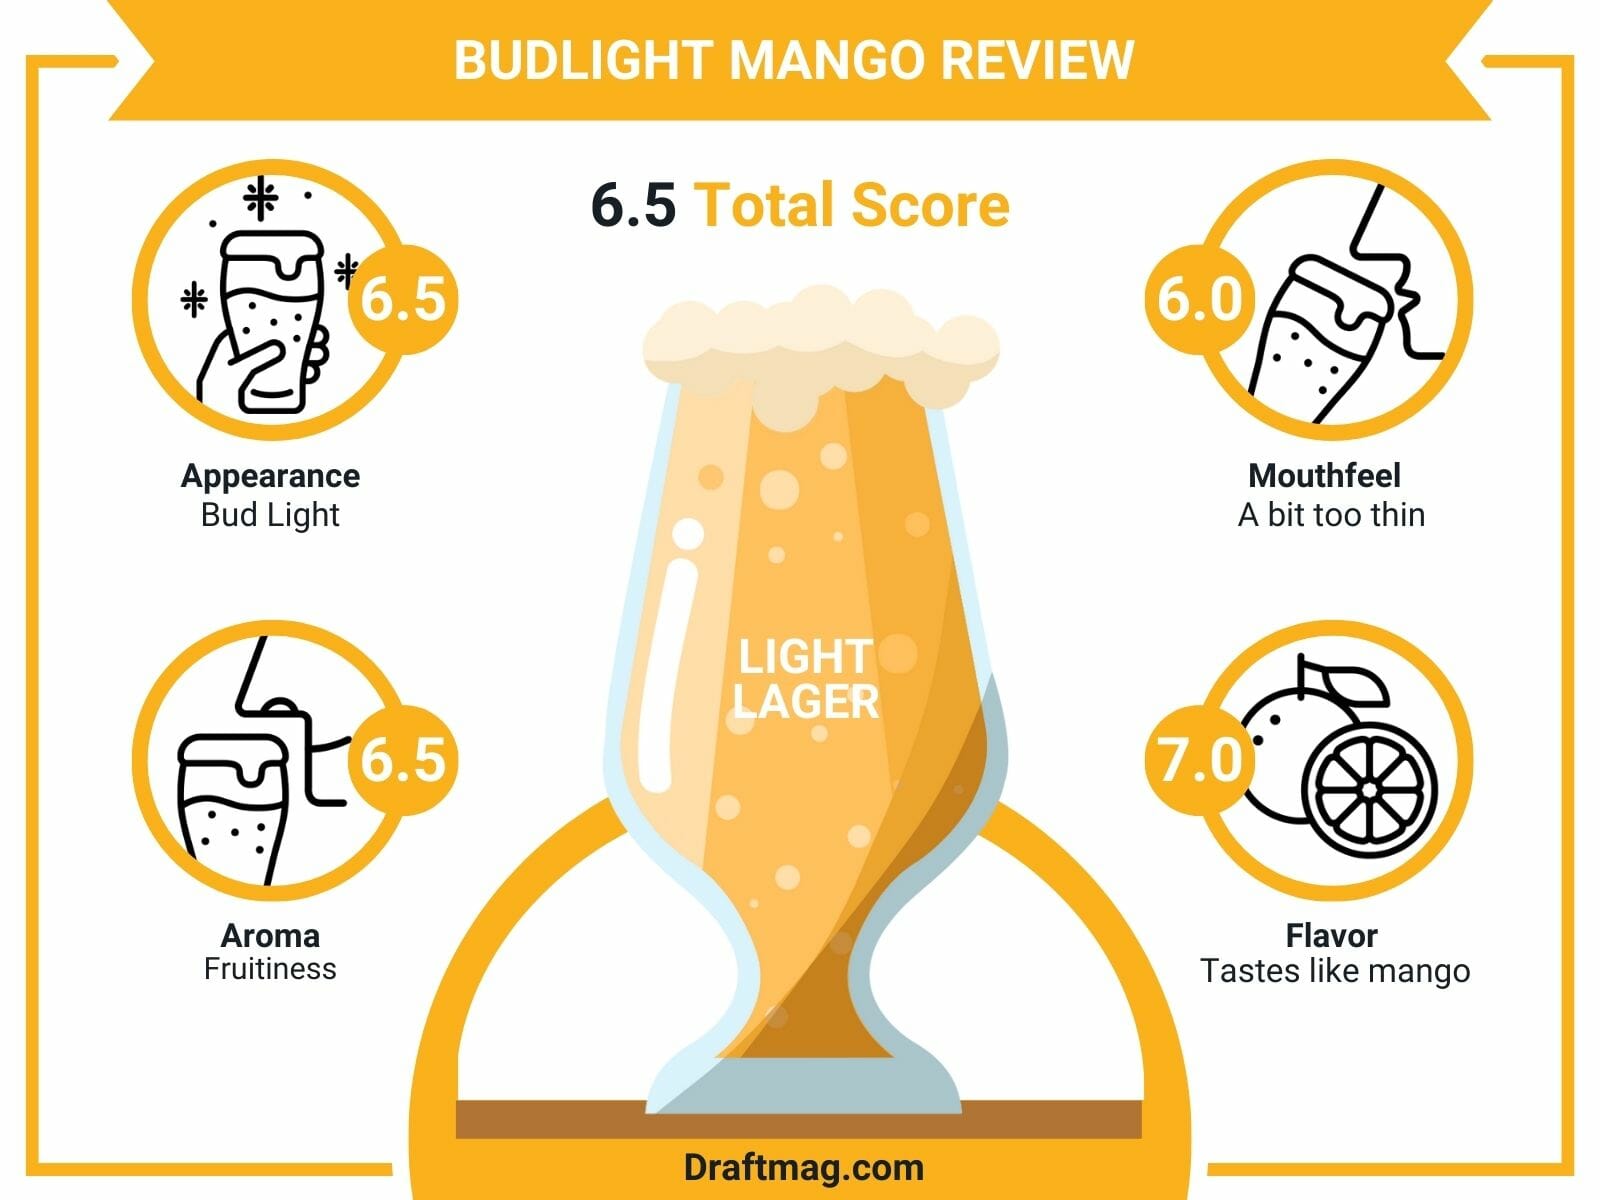 Budlight Mango Review Infographic